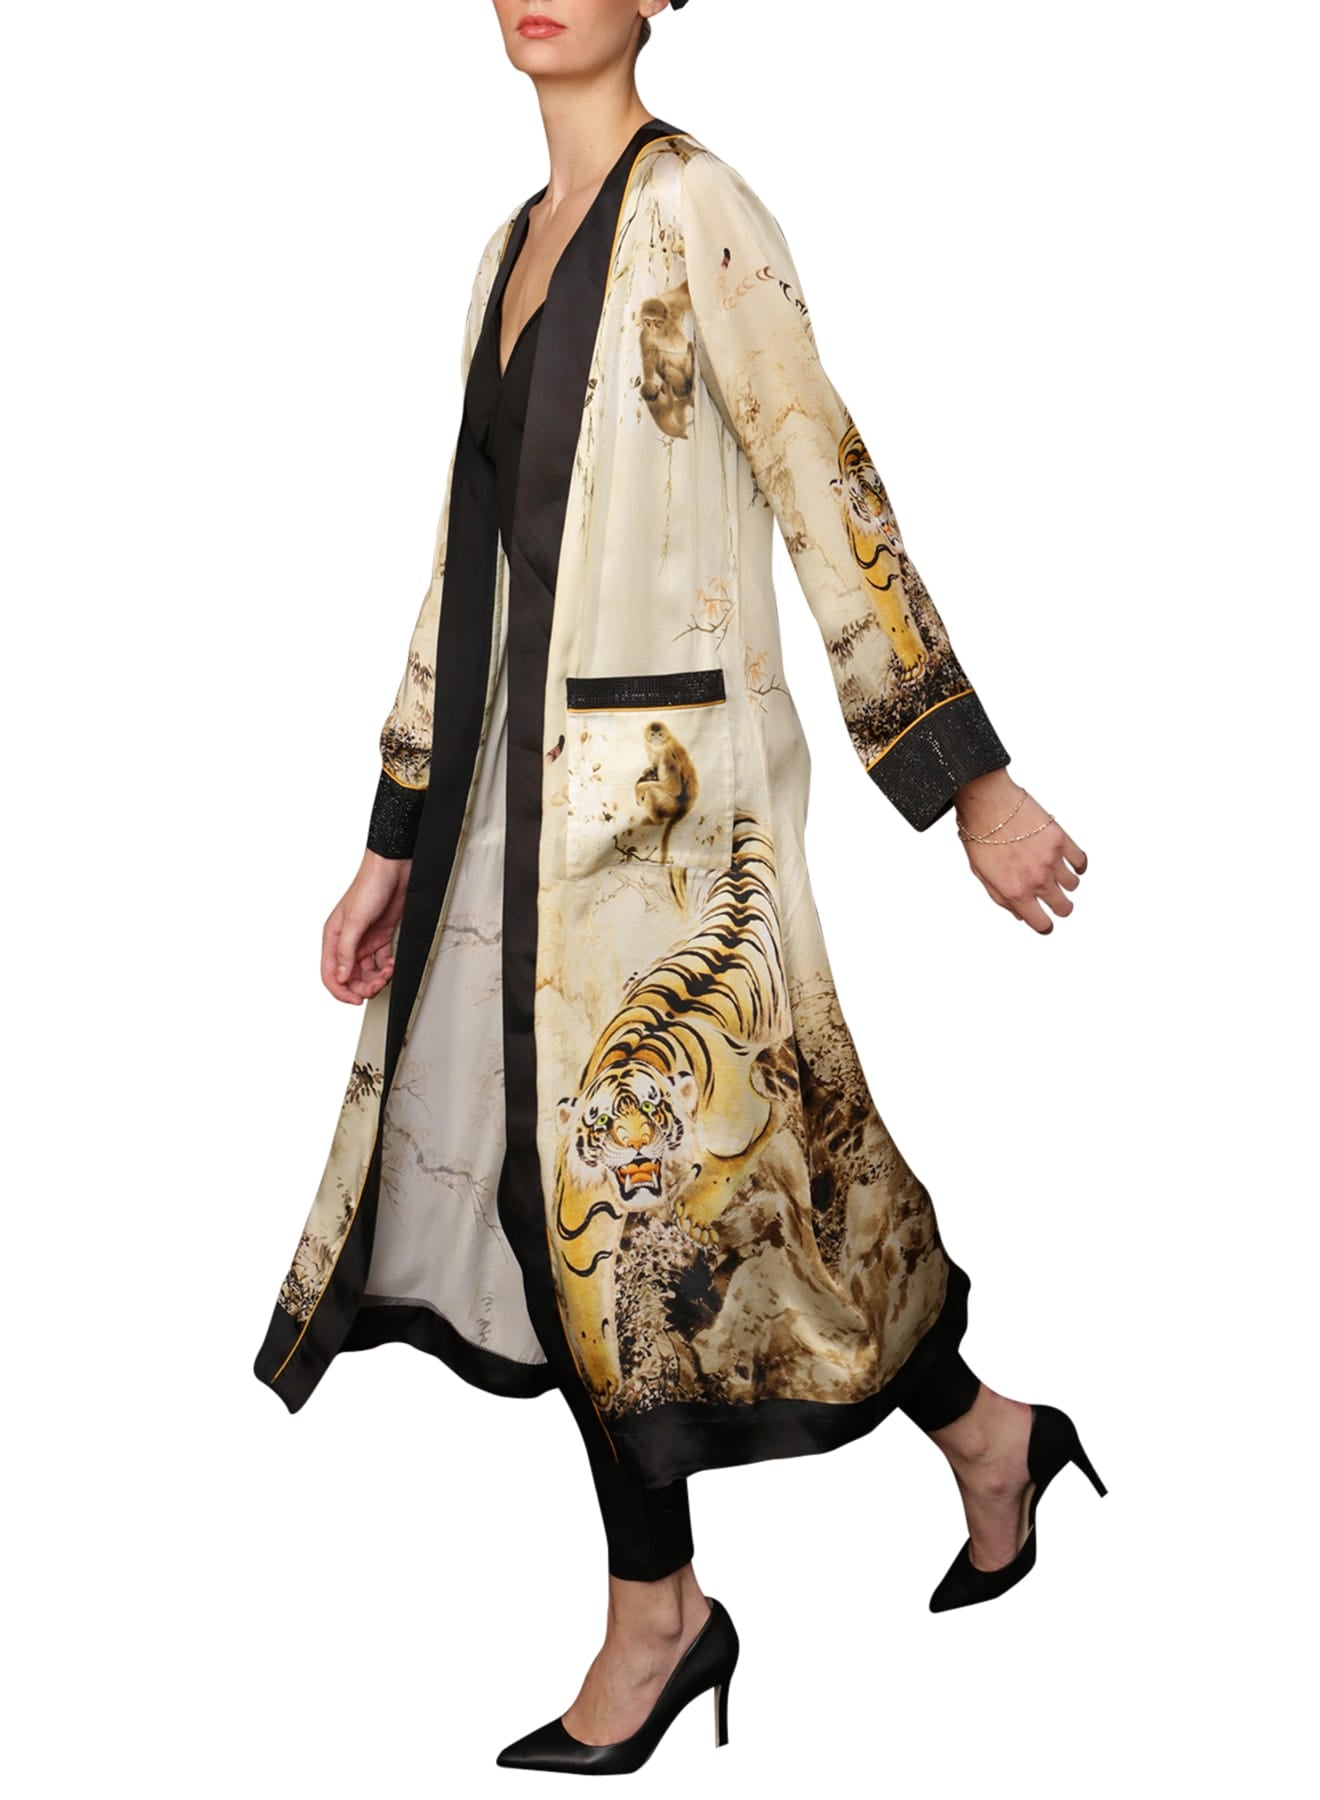 "Kyle X Shahida" "sexy silk robe" "silk robes for women" "kimono silk robes for women" "womens long silk robe"